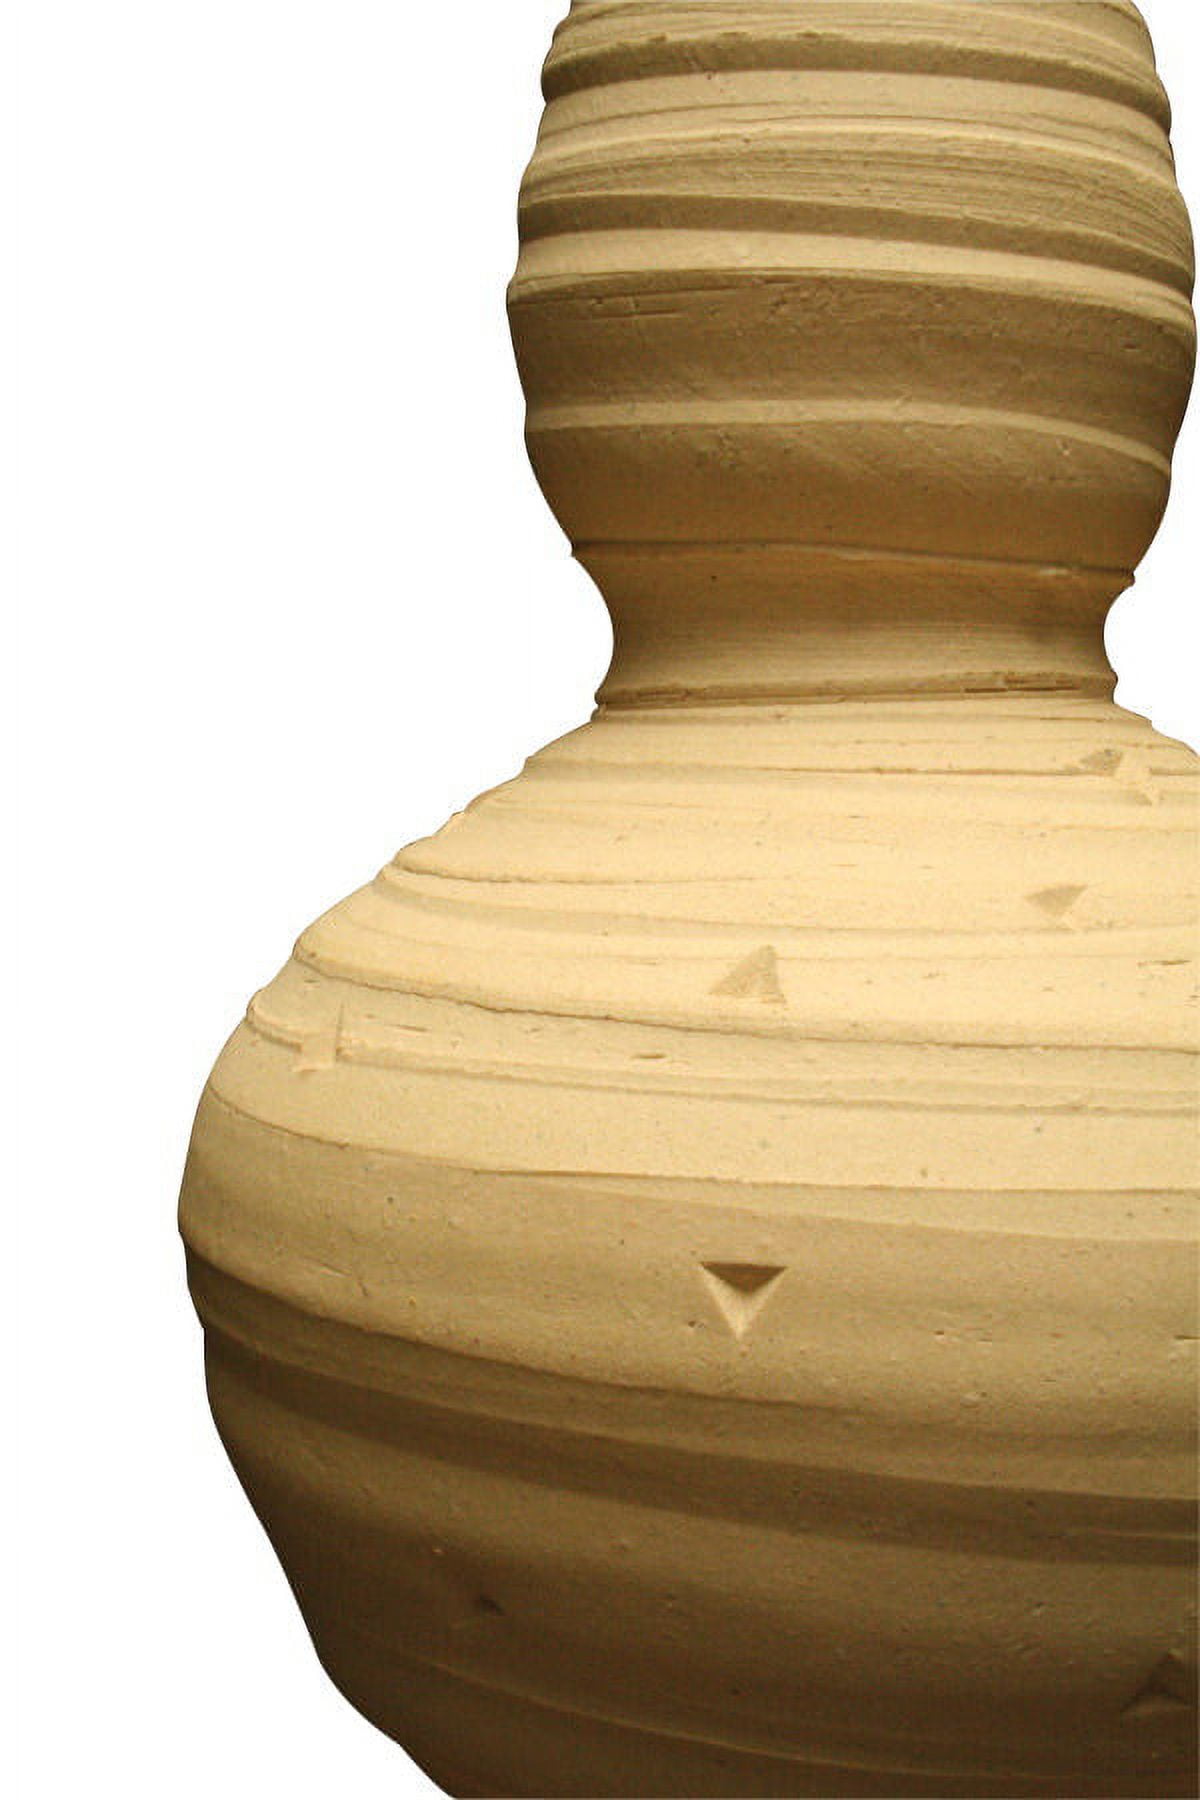 AMACO® No. 77 Terra-Cotta Clay - 50-lb. Carton